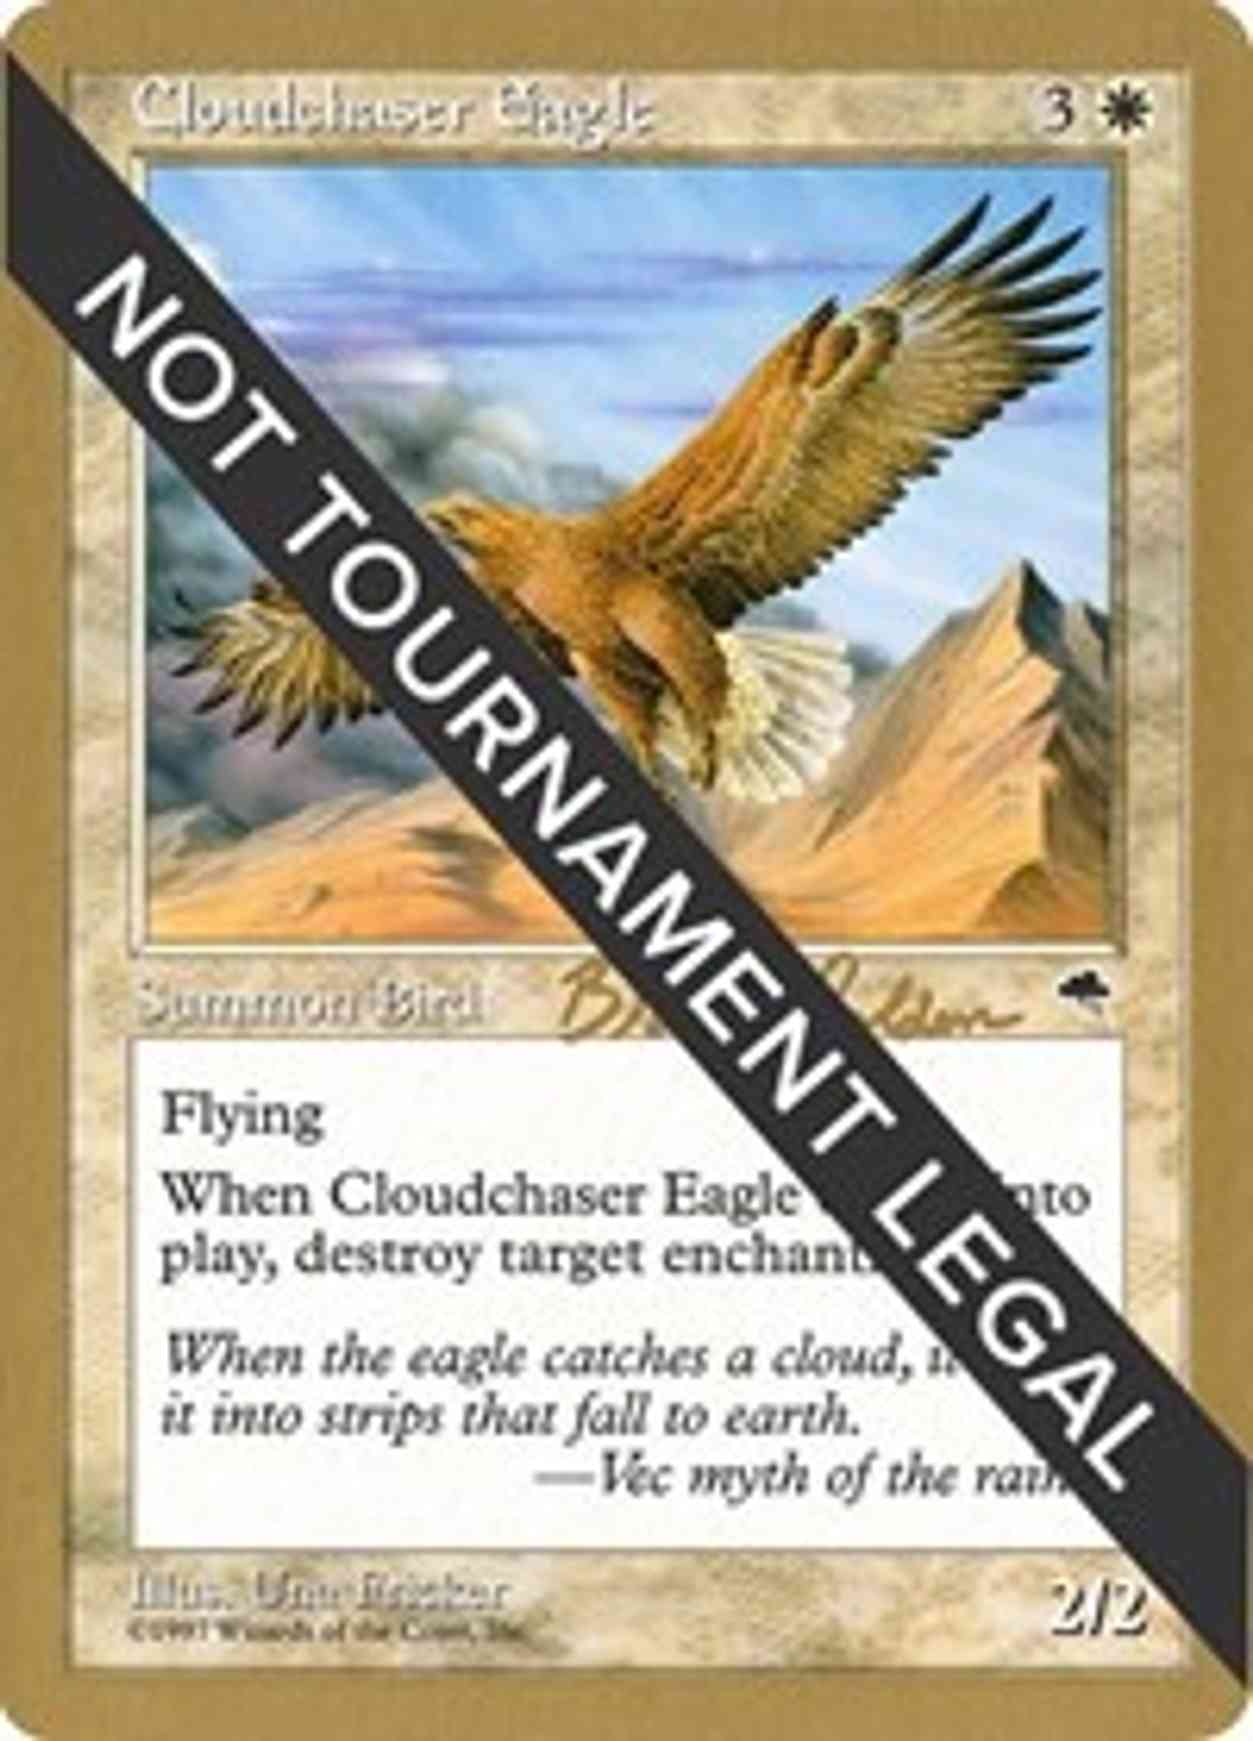 Cloudchaser Eagle - 1998 Brian Selden (TMP) magic card front